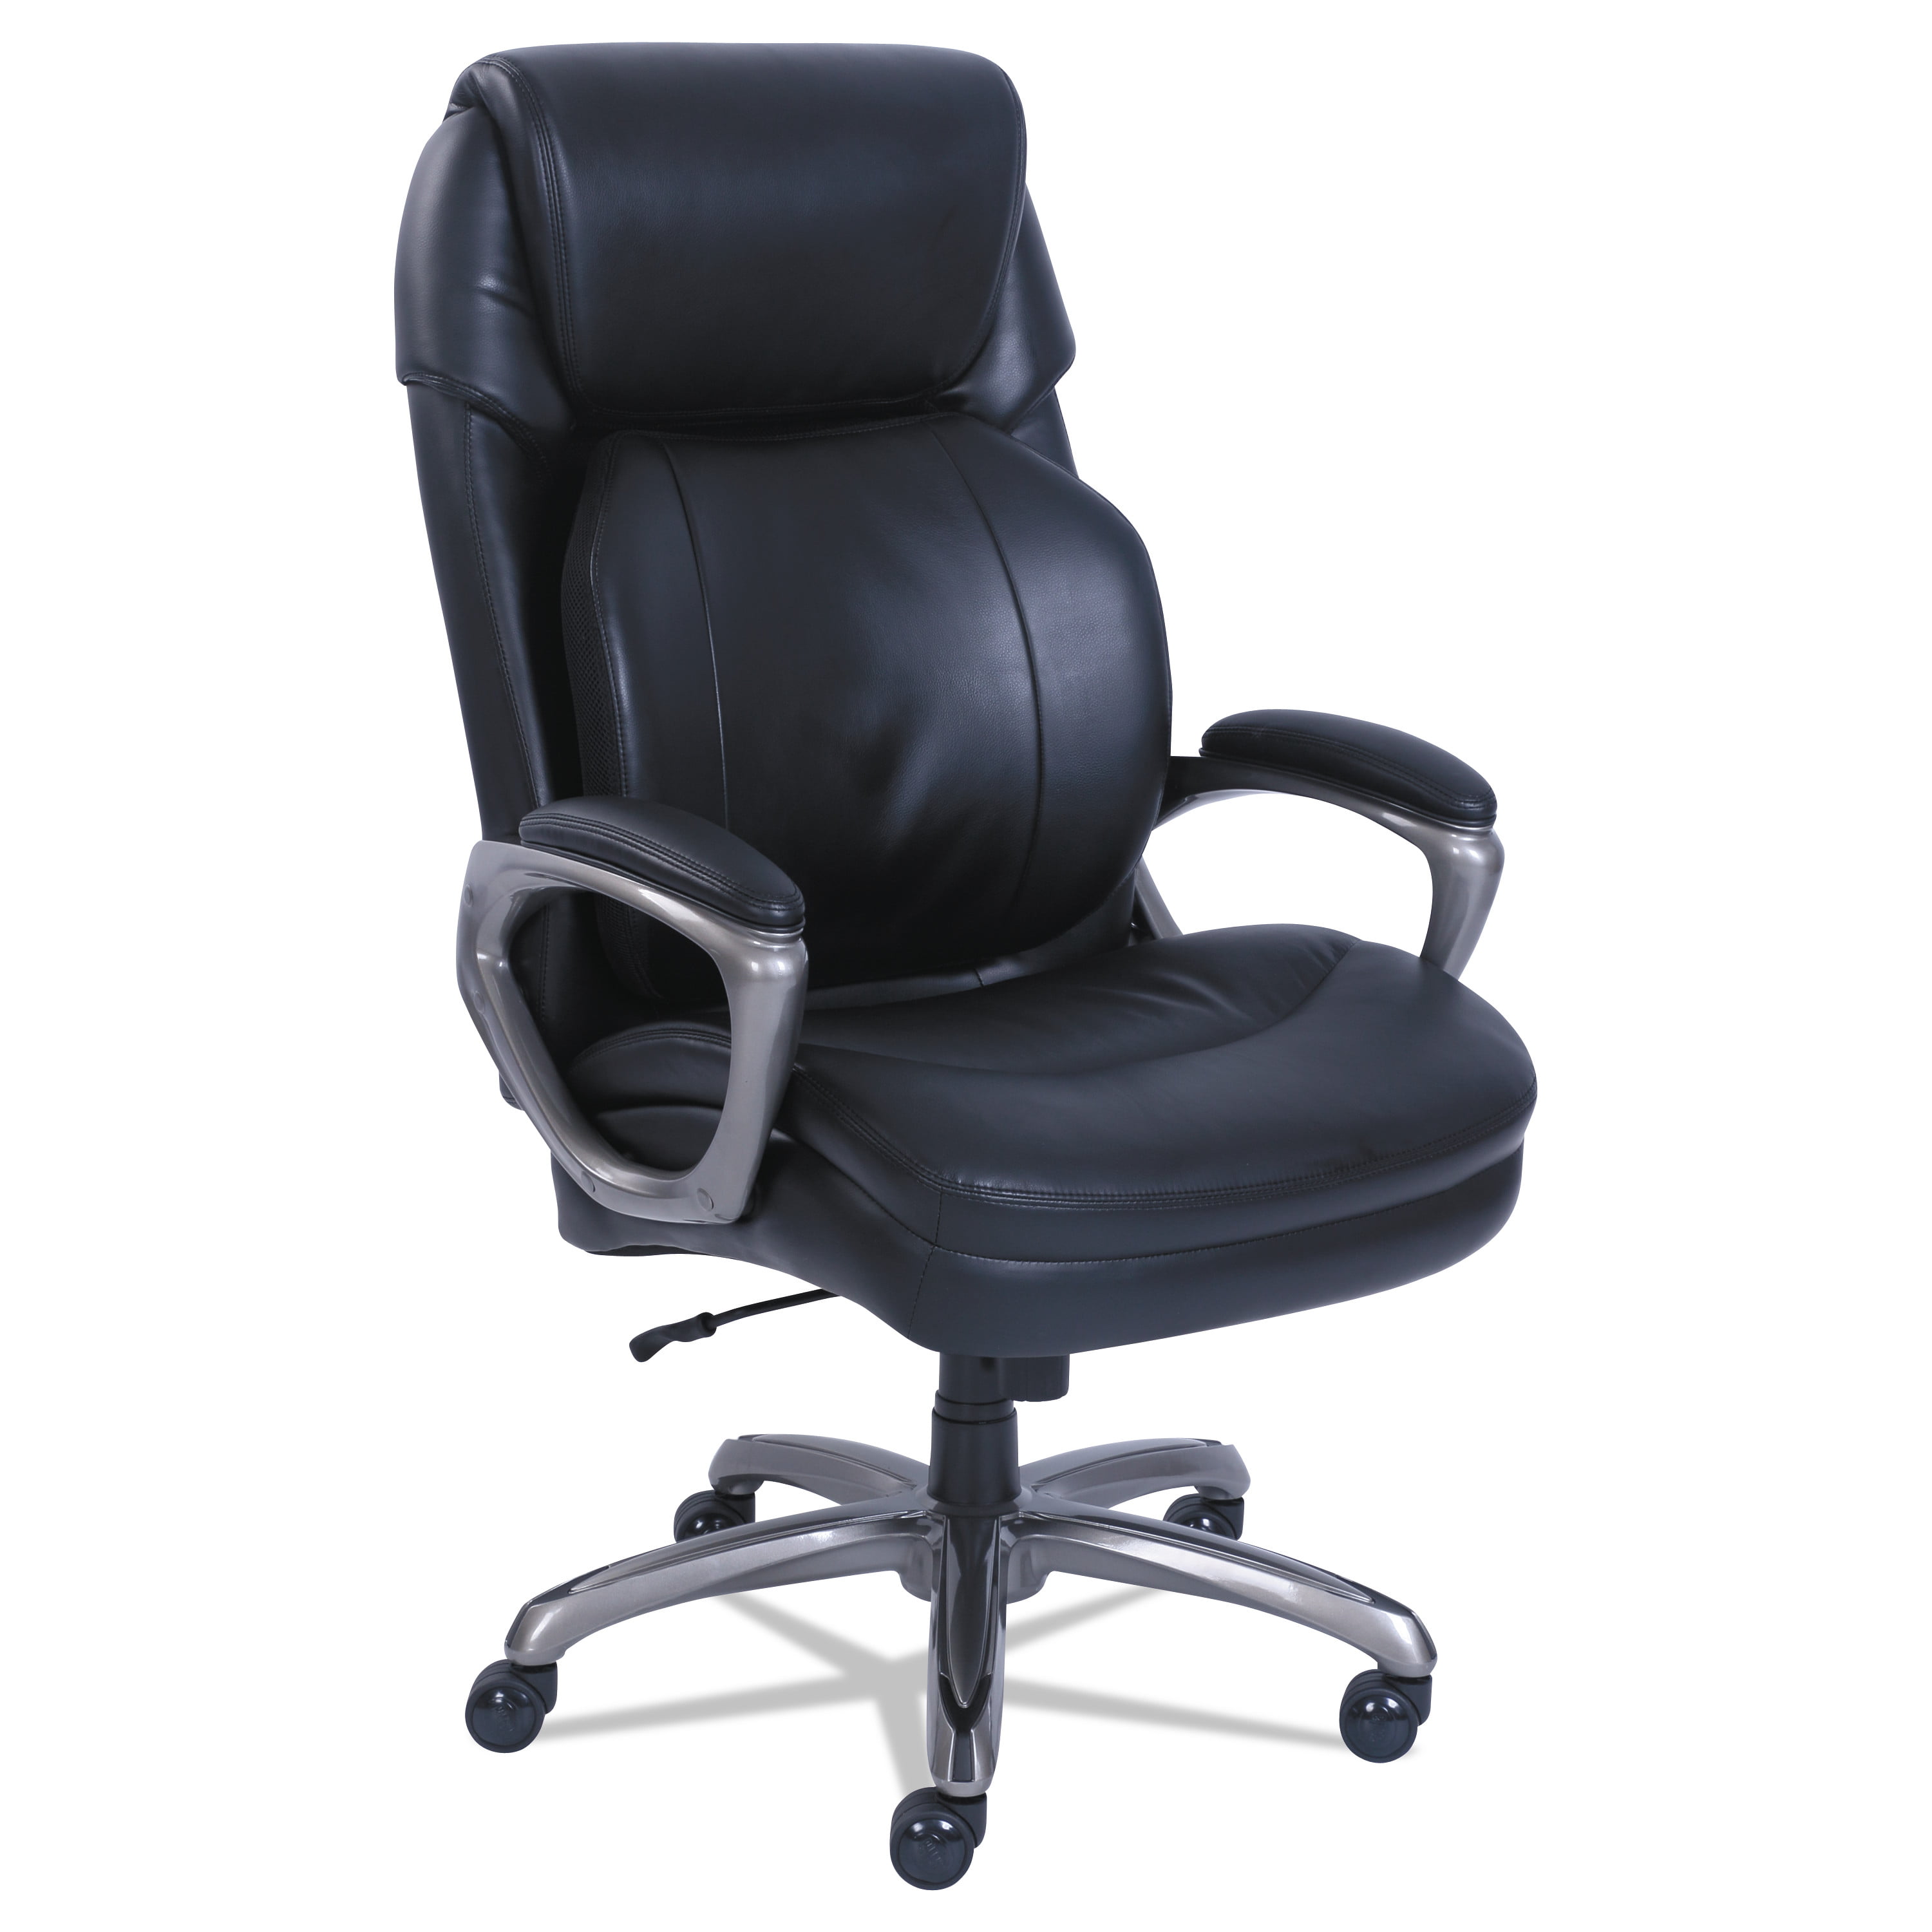 Basics Office Chair /& Foot Rest Black